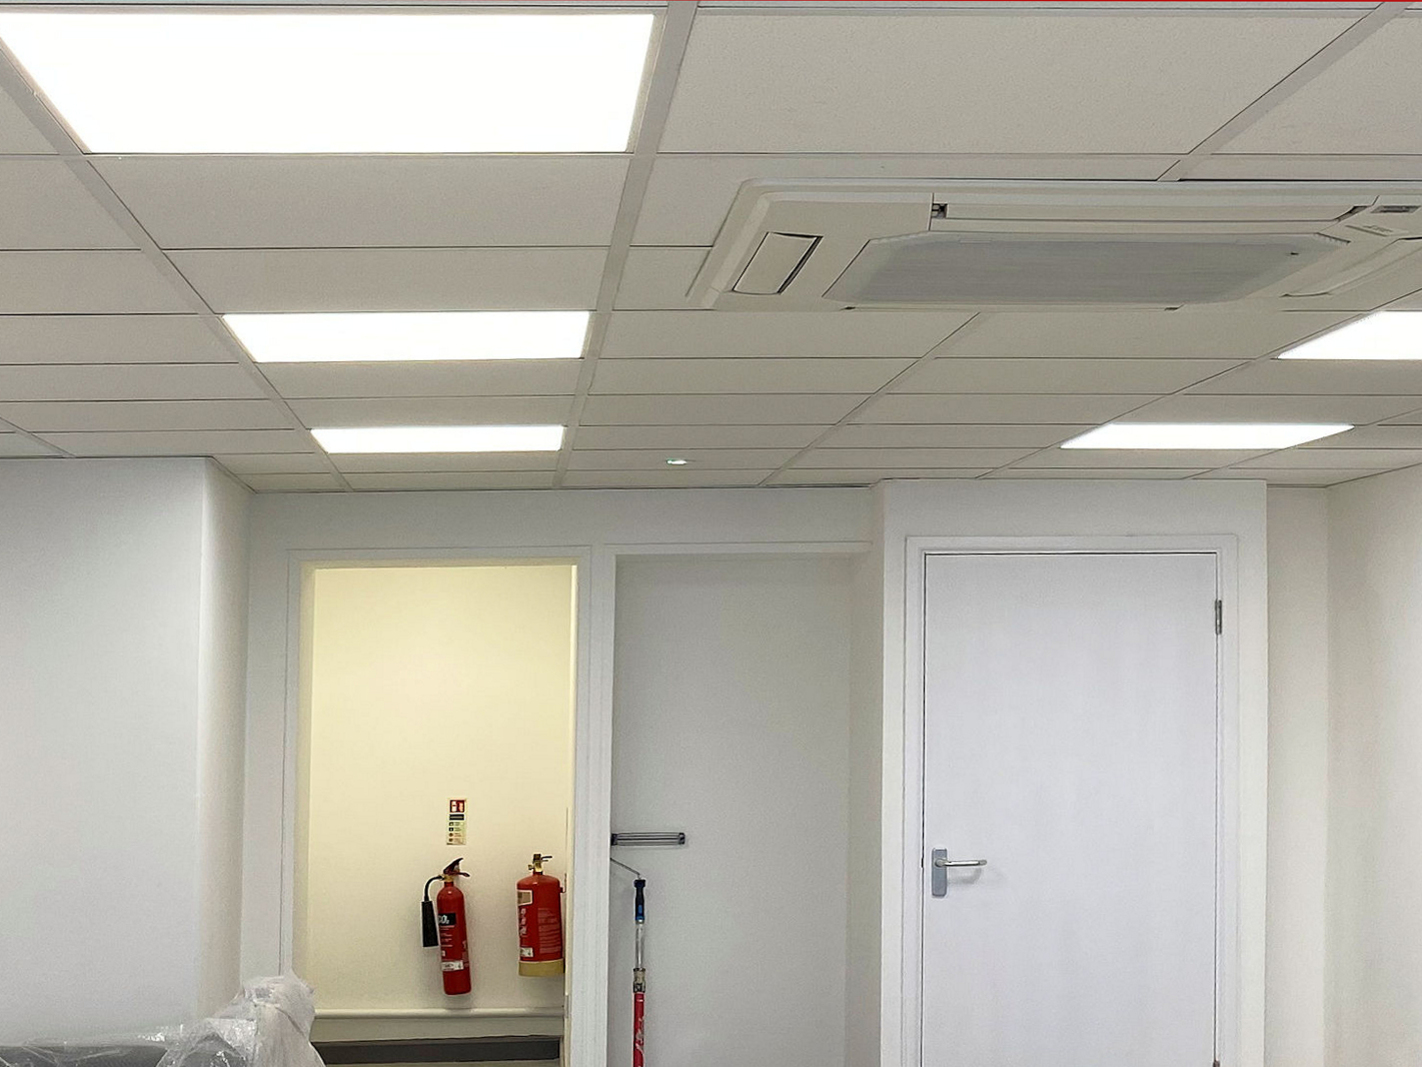 Shop Refurbishment, New led lighting and ceiling tiles Barnstaple North Devon